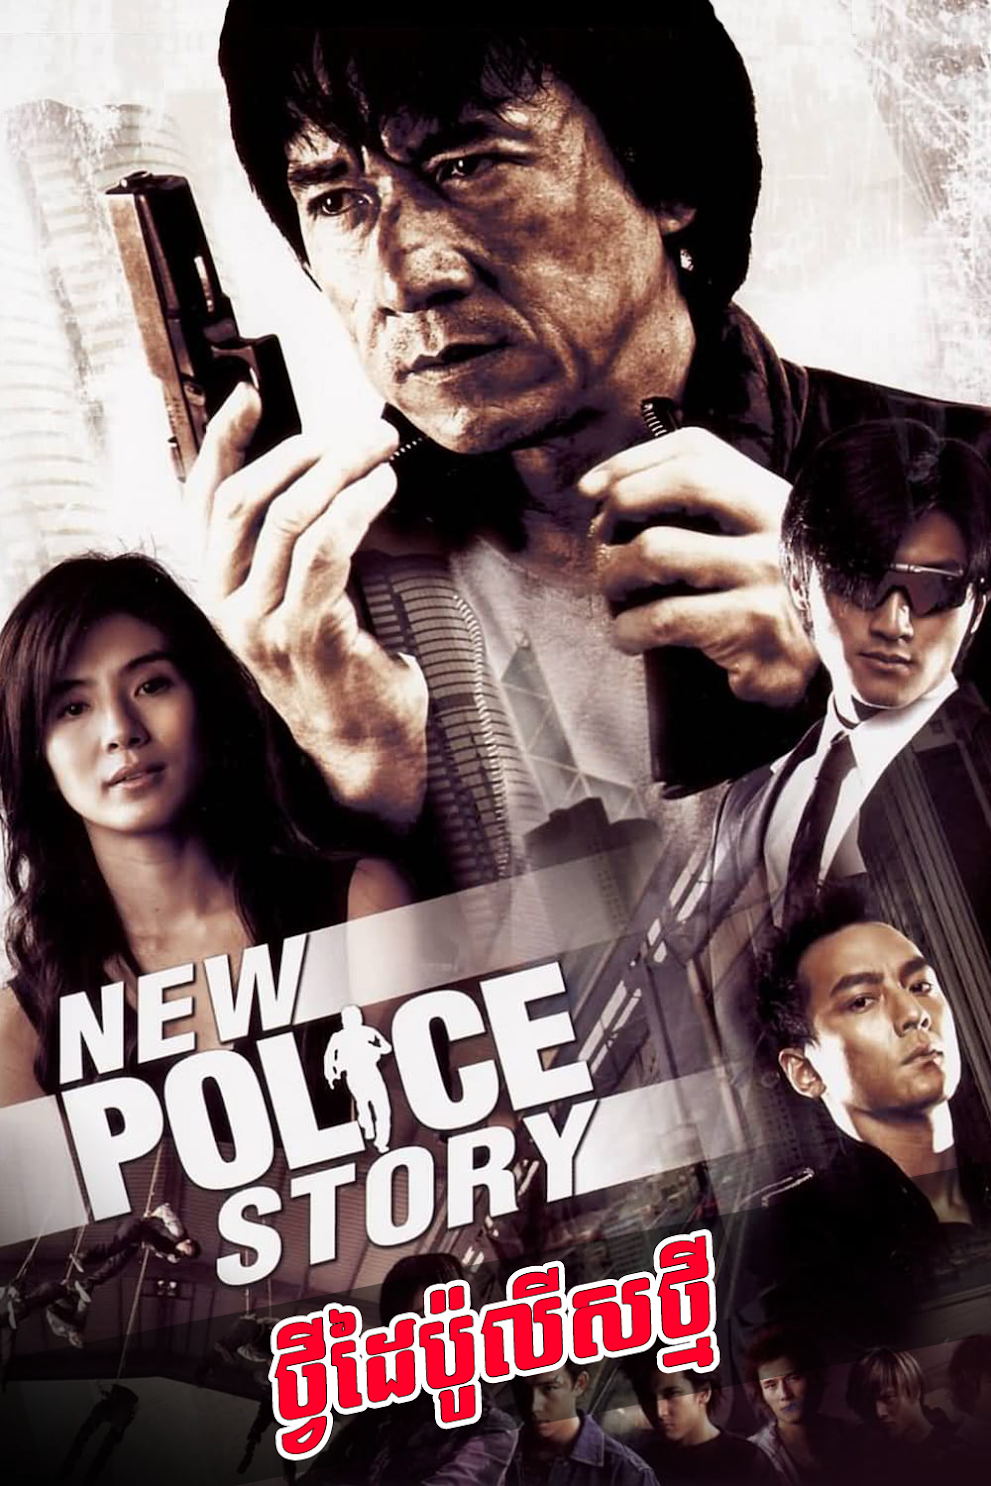 Police Story 2004